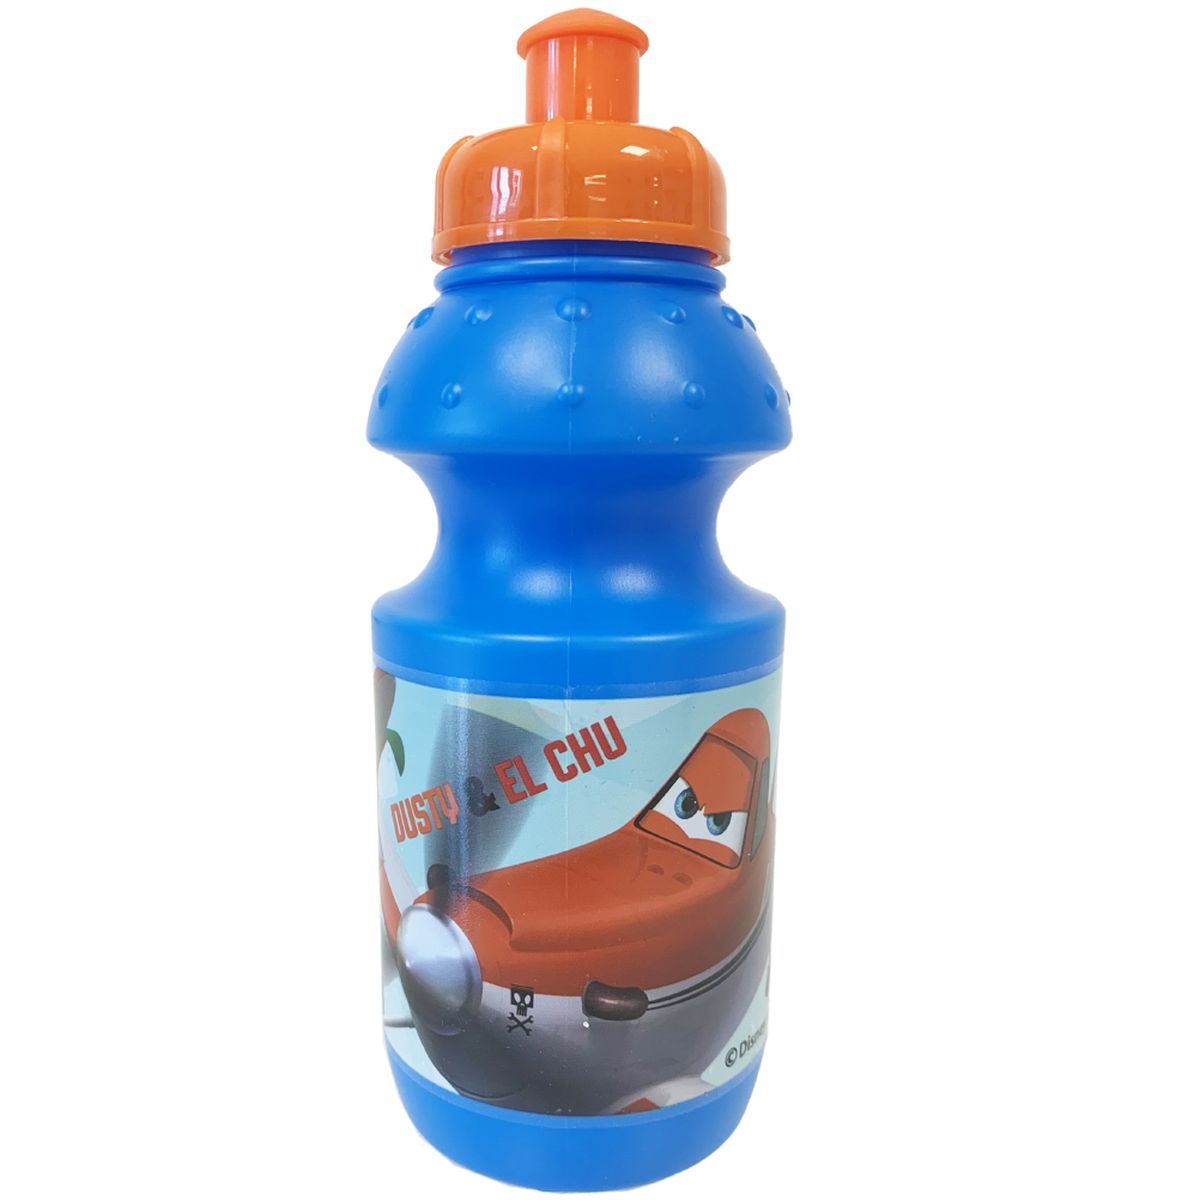 Planes sports bottle